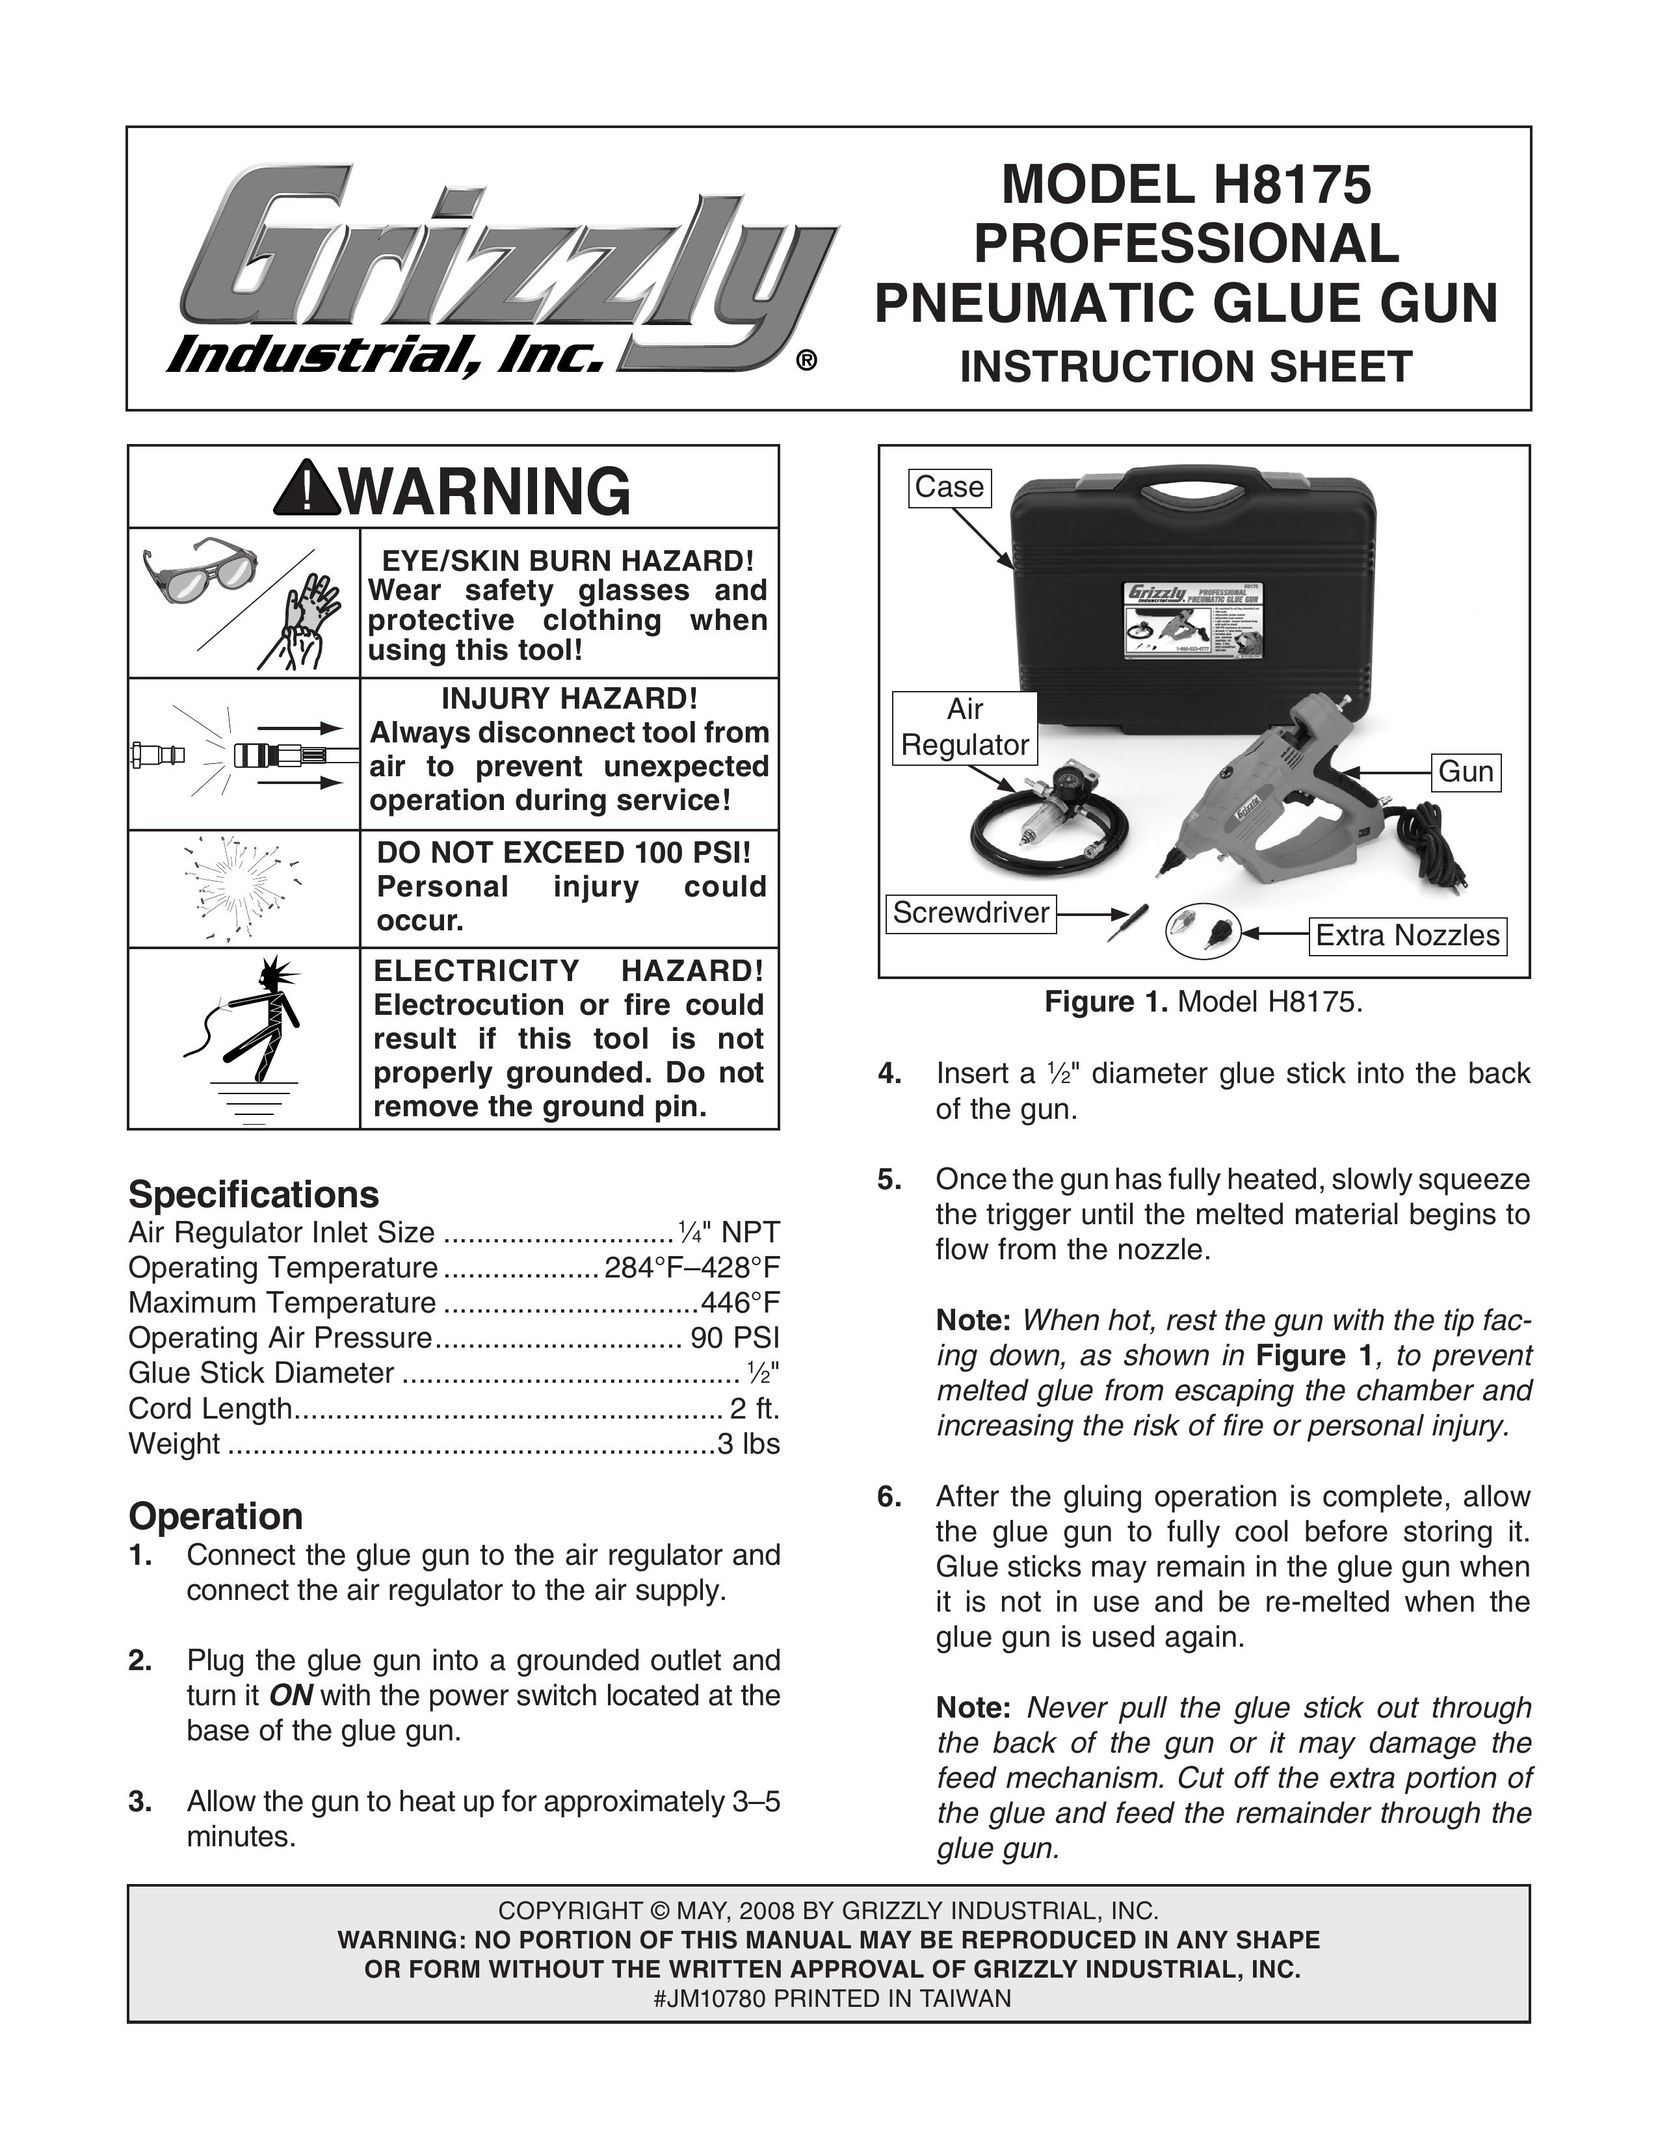 Grizzly H8175 Glue Gun User Manual